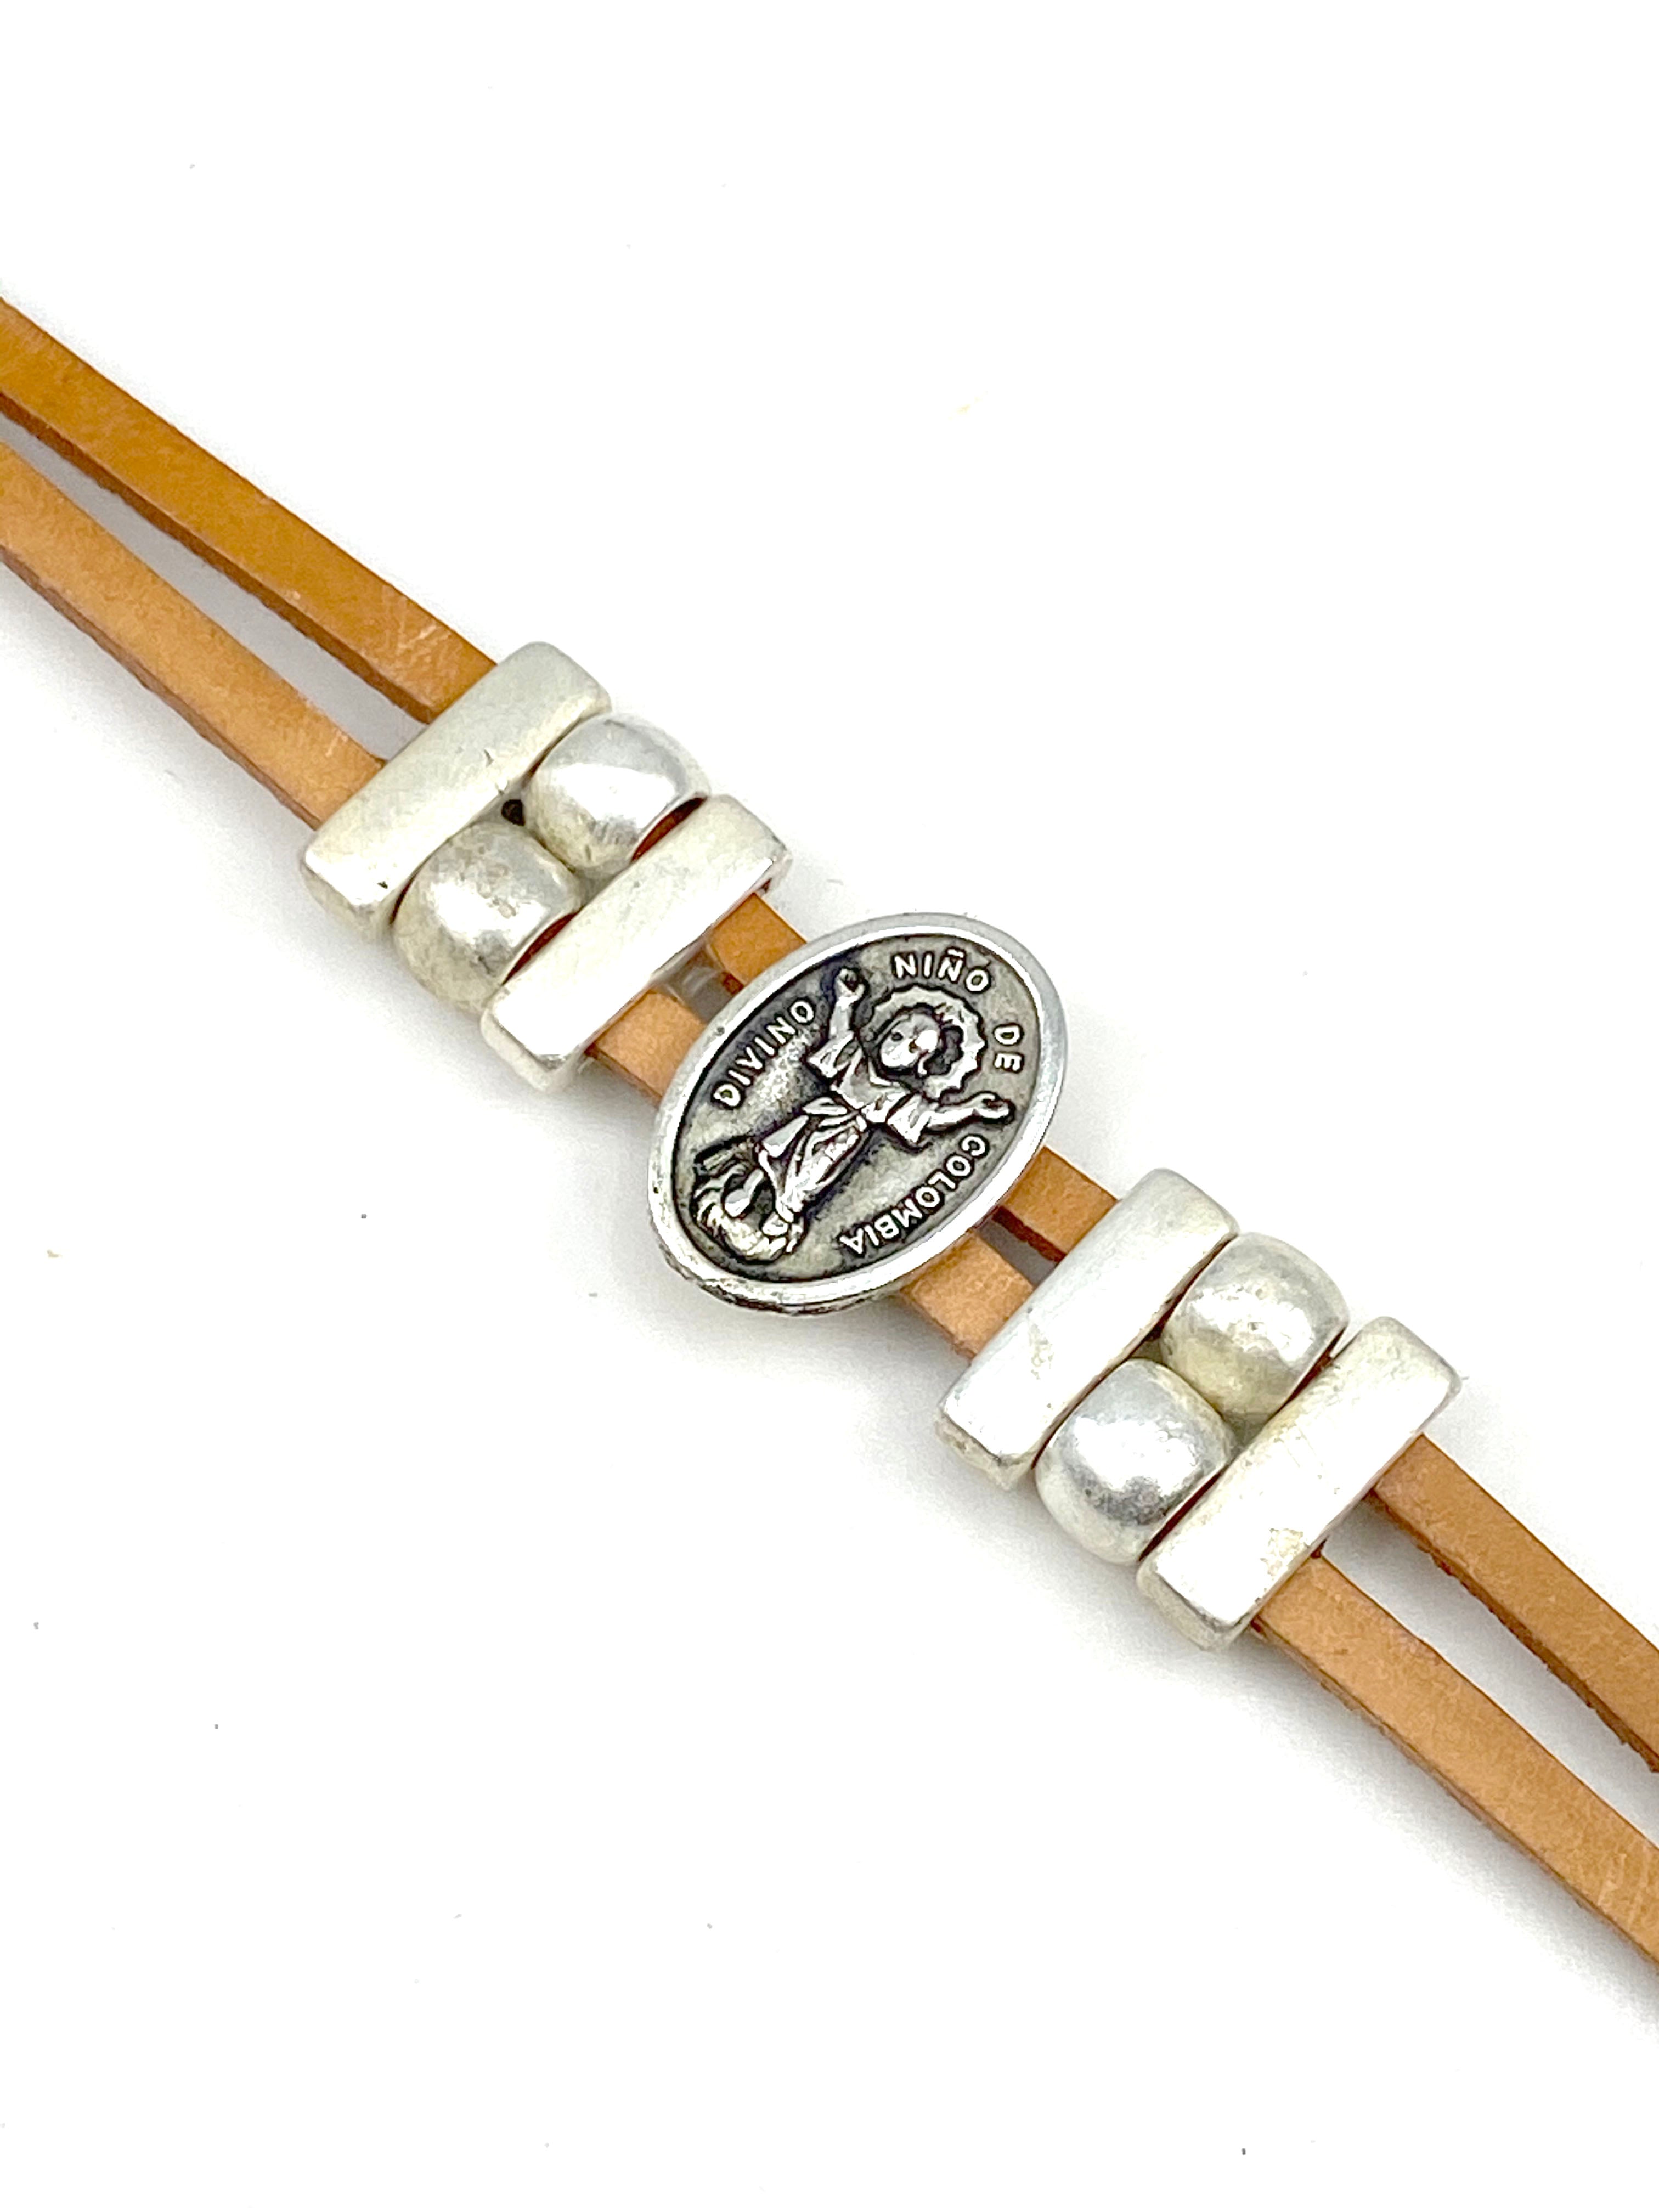 Bracelet Divino Nino Jesus bracelet handmade jewelry with Genuine Double Leather straps by Graciela's Collection